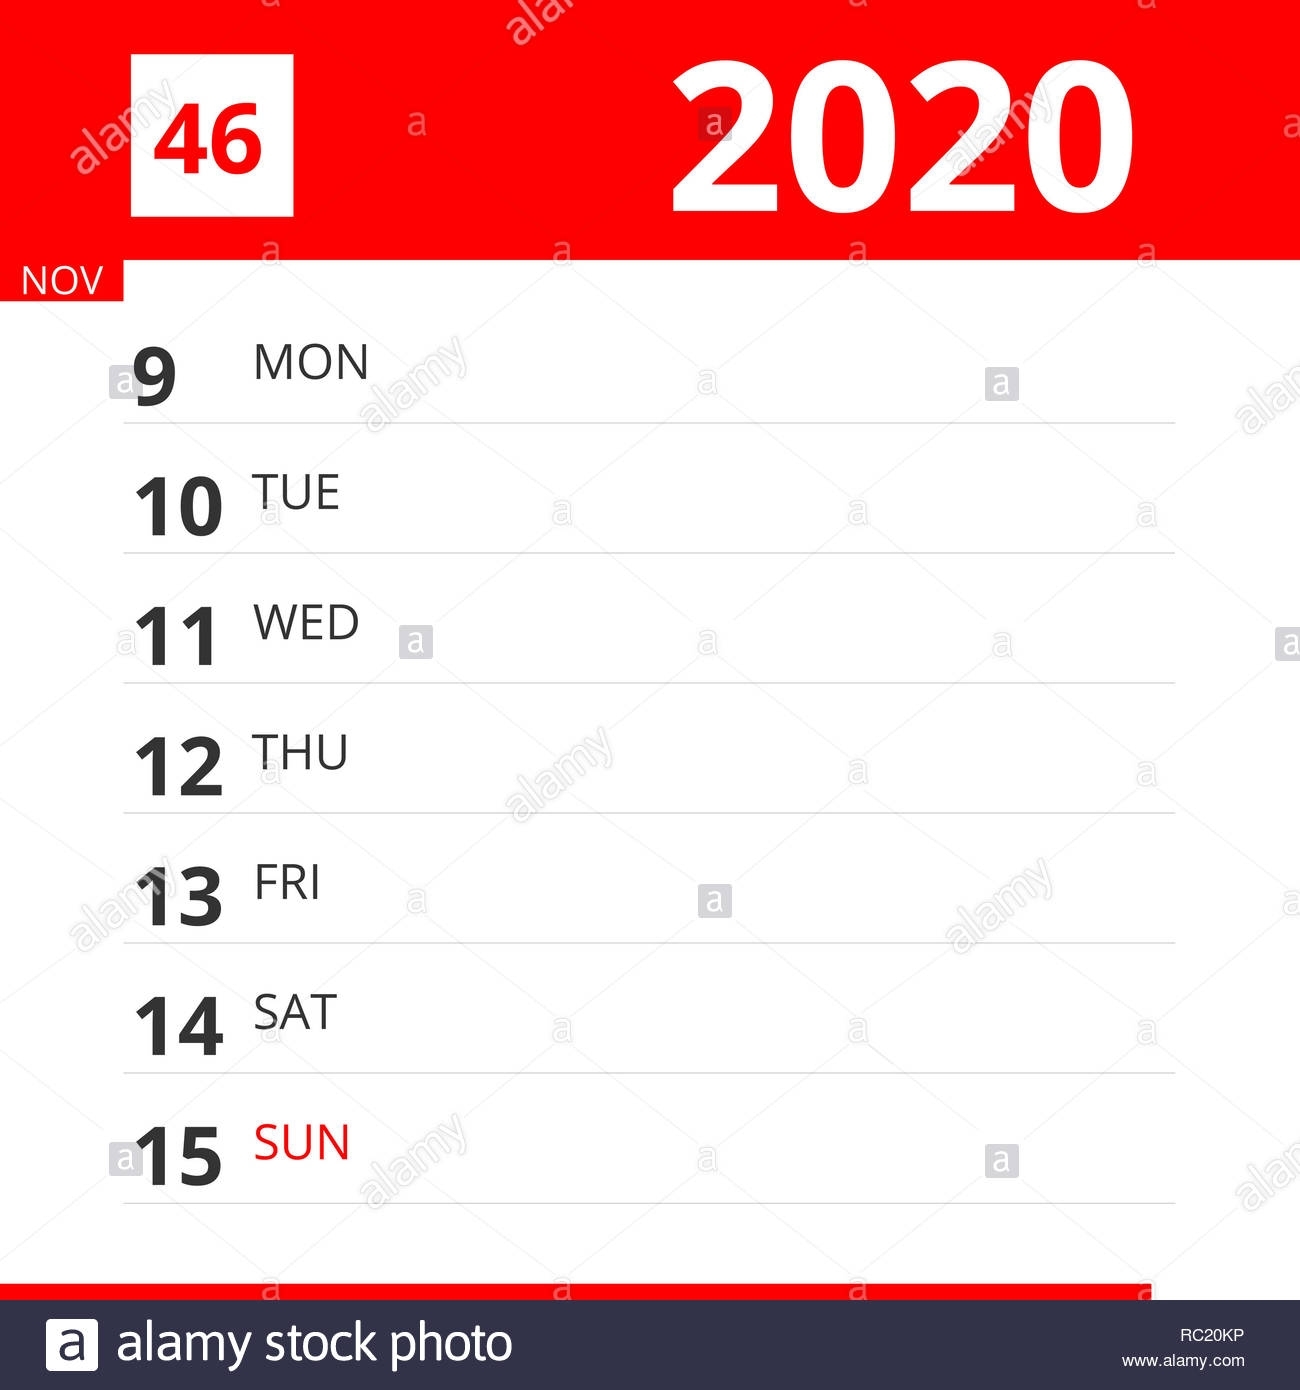 Calendar Planner For Week 46 In 2020, Ends November 15, 2020